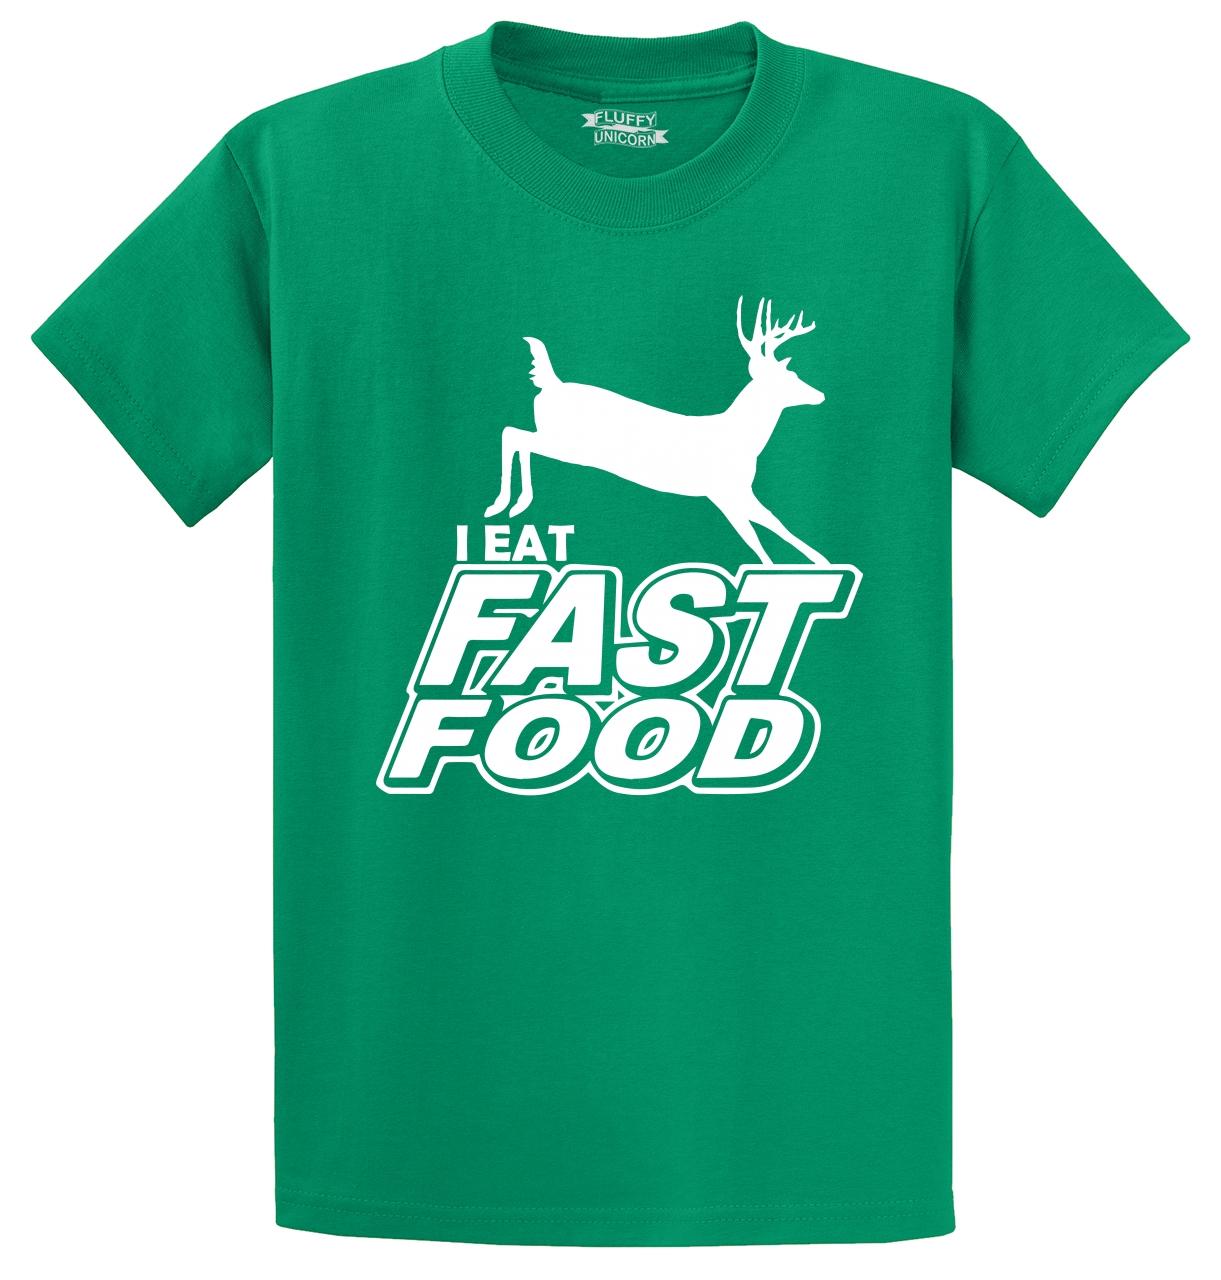 I Eat Fast Food Funny Hunter Deer Game Shooting Hunting Gift Tee Shirt up to 5X